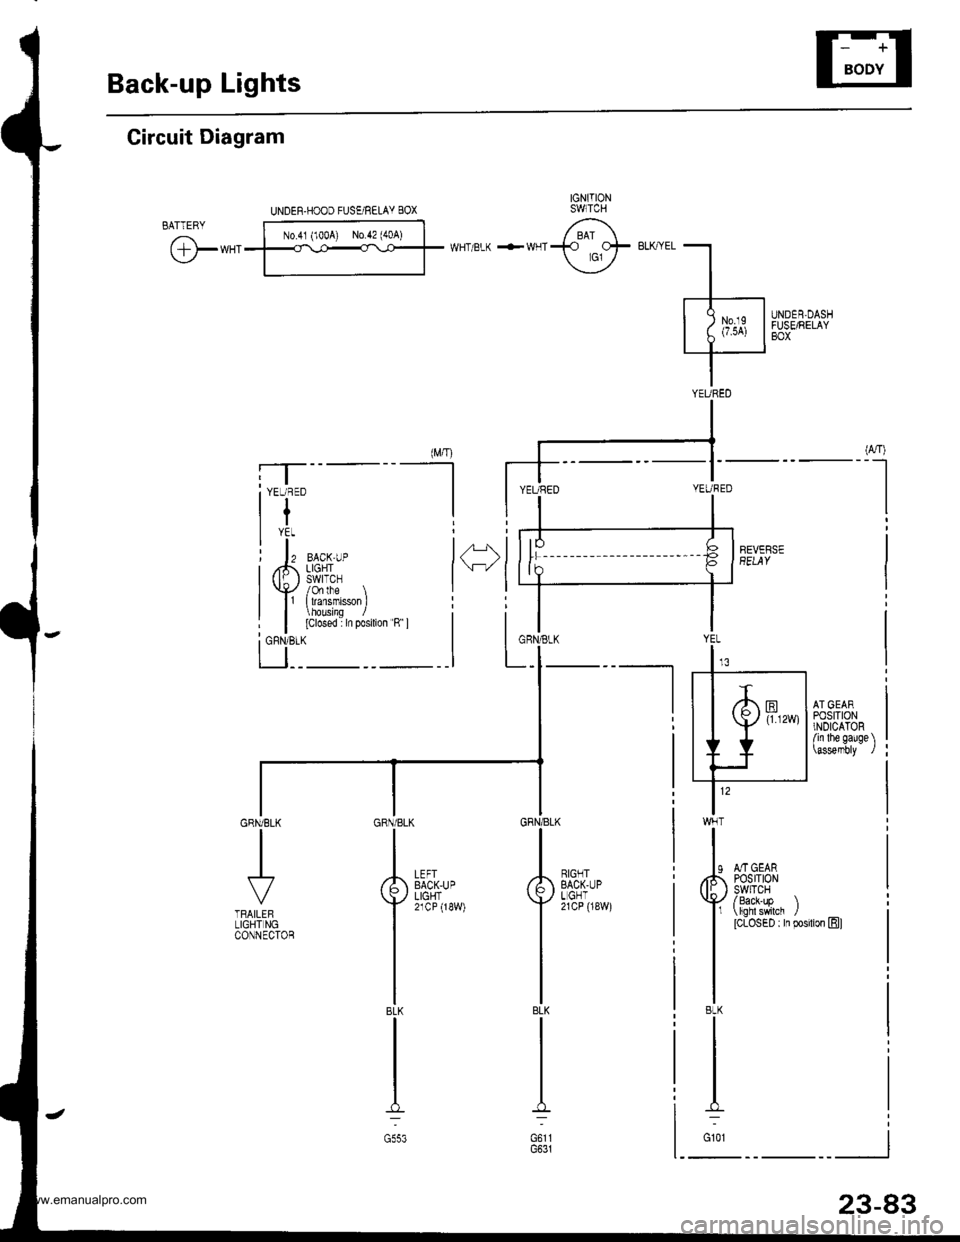 HONDA CR-V 1999 RD1-RD3 / 1.G User Guide 
Back-up Lights
Circuit Diagram
(M/r)
I
I
8LK
I
G101
GRN/BLK
I
TBLK
I
UNDEN-HOOD FUSE/RELAY BOX
BACK,UPLIGHTswtTcH/0n1he \I lransmisson J
o!s { /lolosed : In posilion R l
LEFIBACK,UPLIGHT21CP (18W)
*"